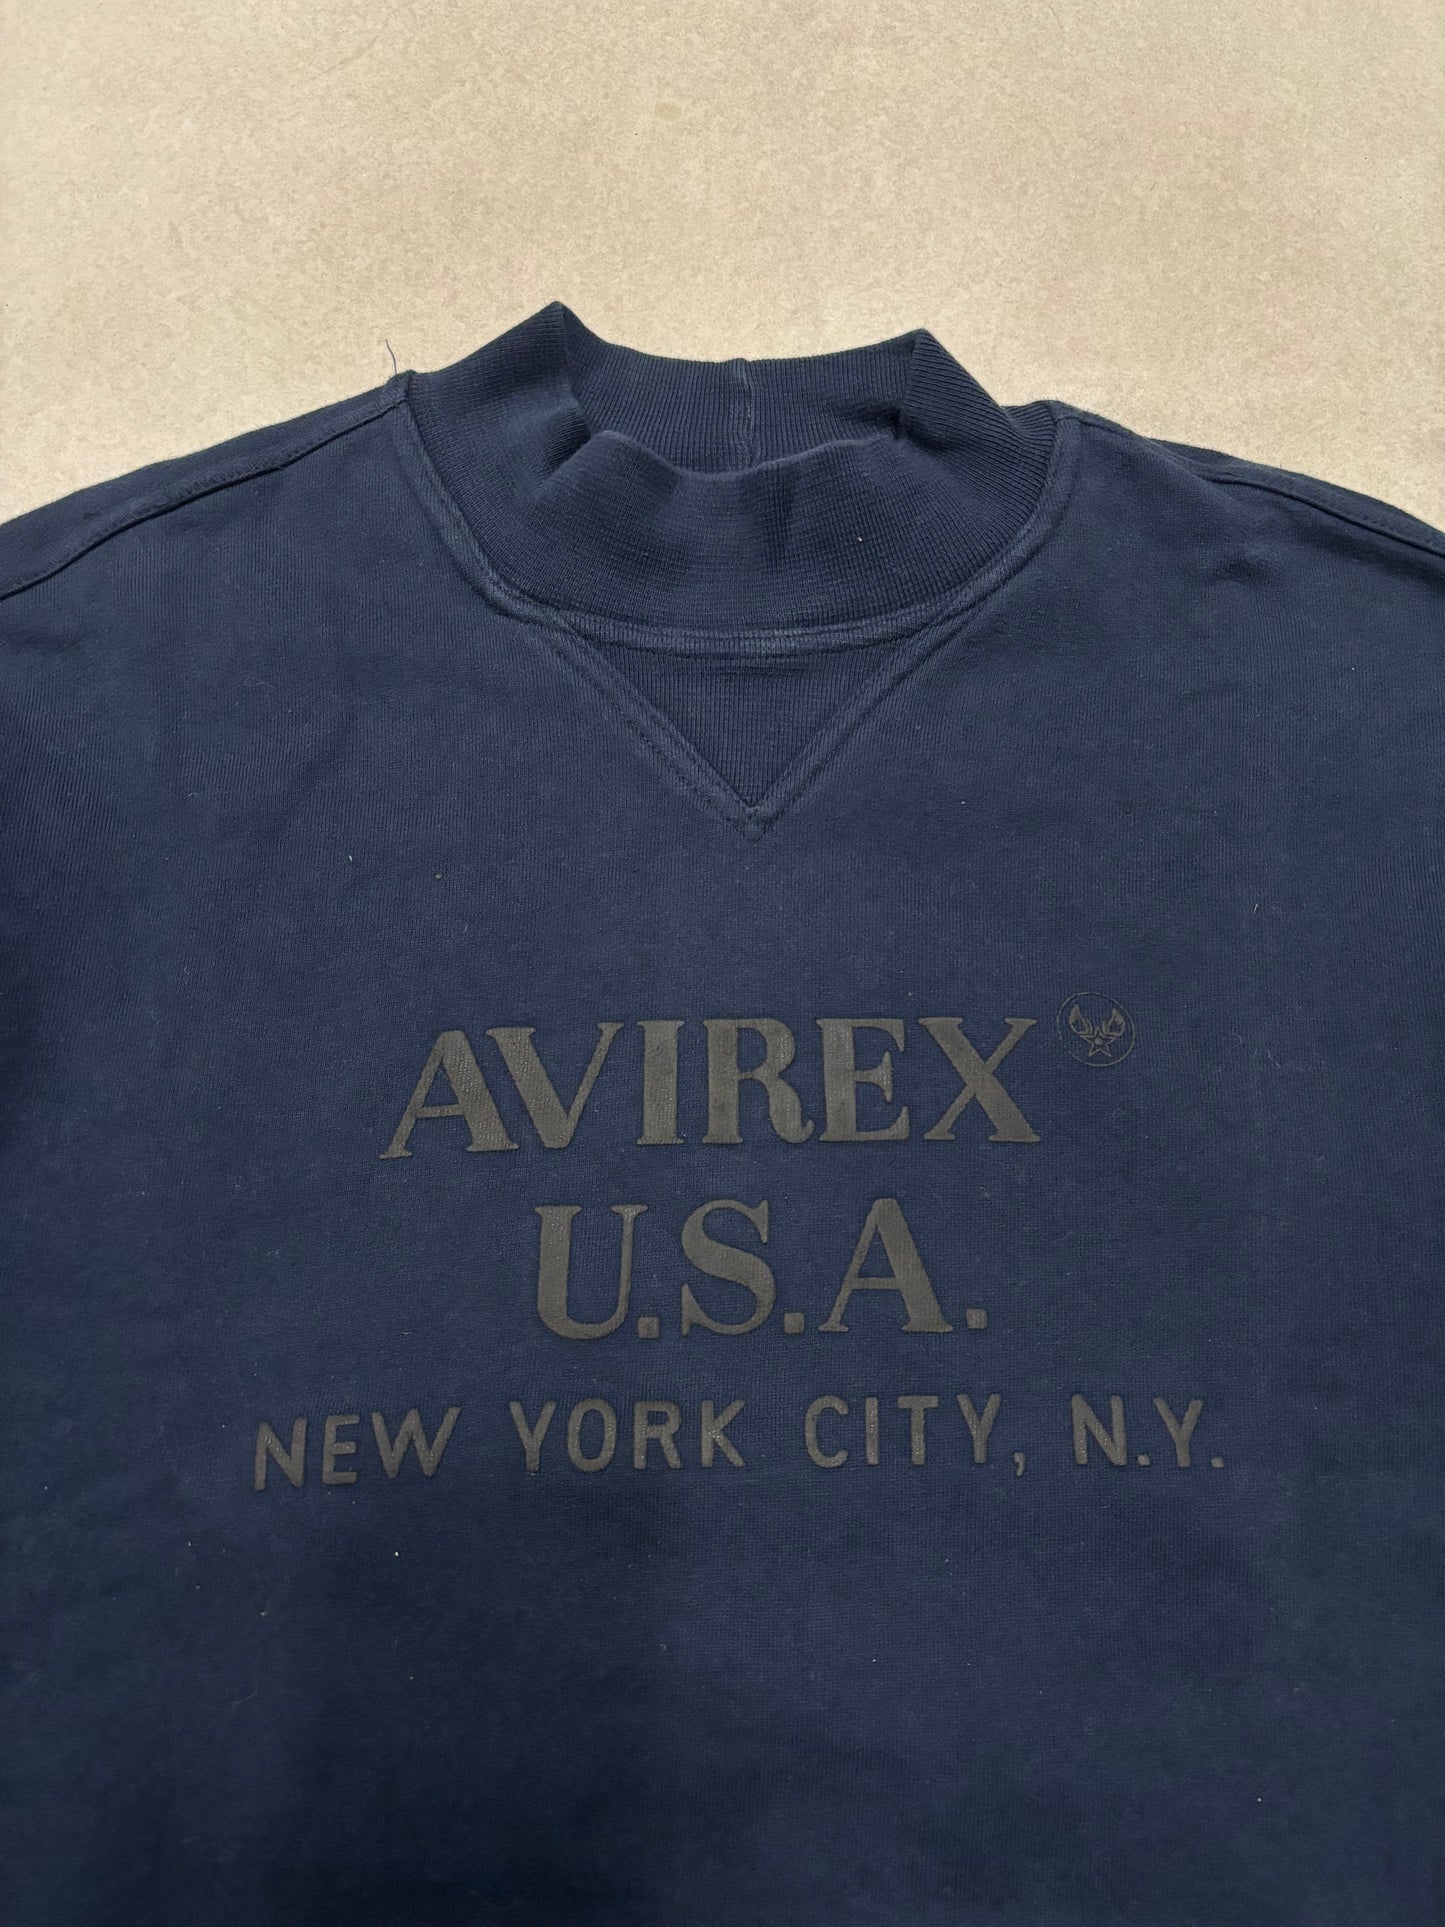 Avirex 90s Vintage Sweatshirt - M